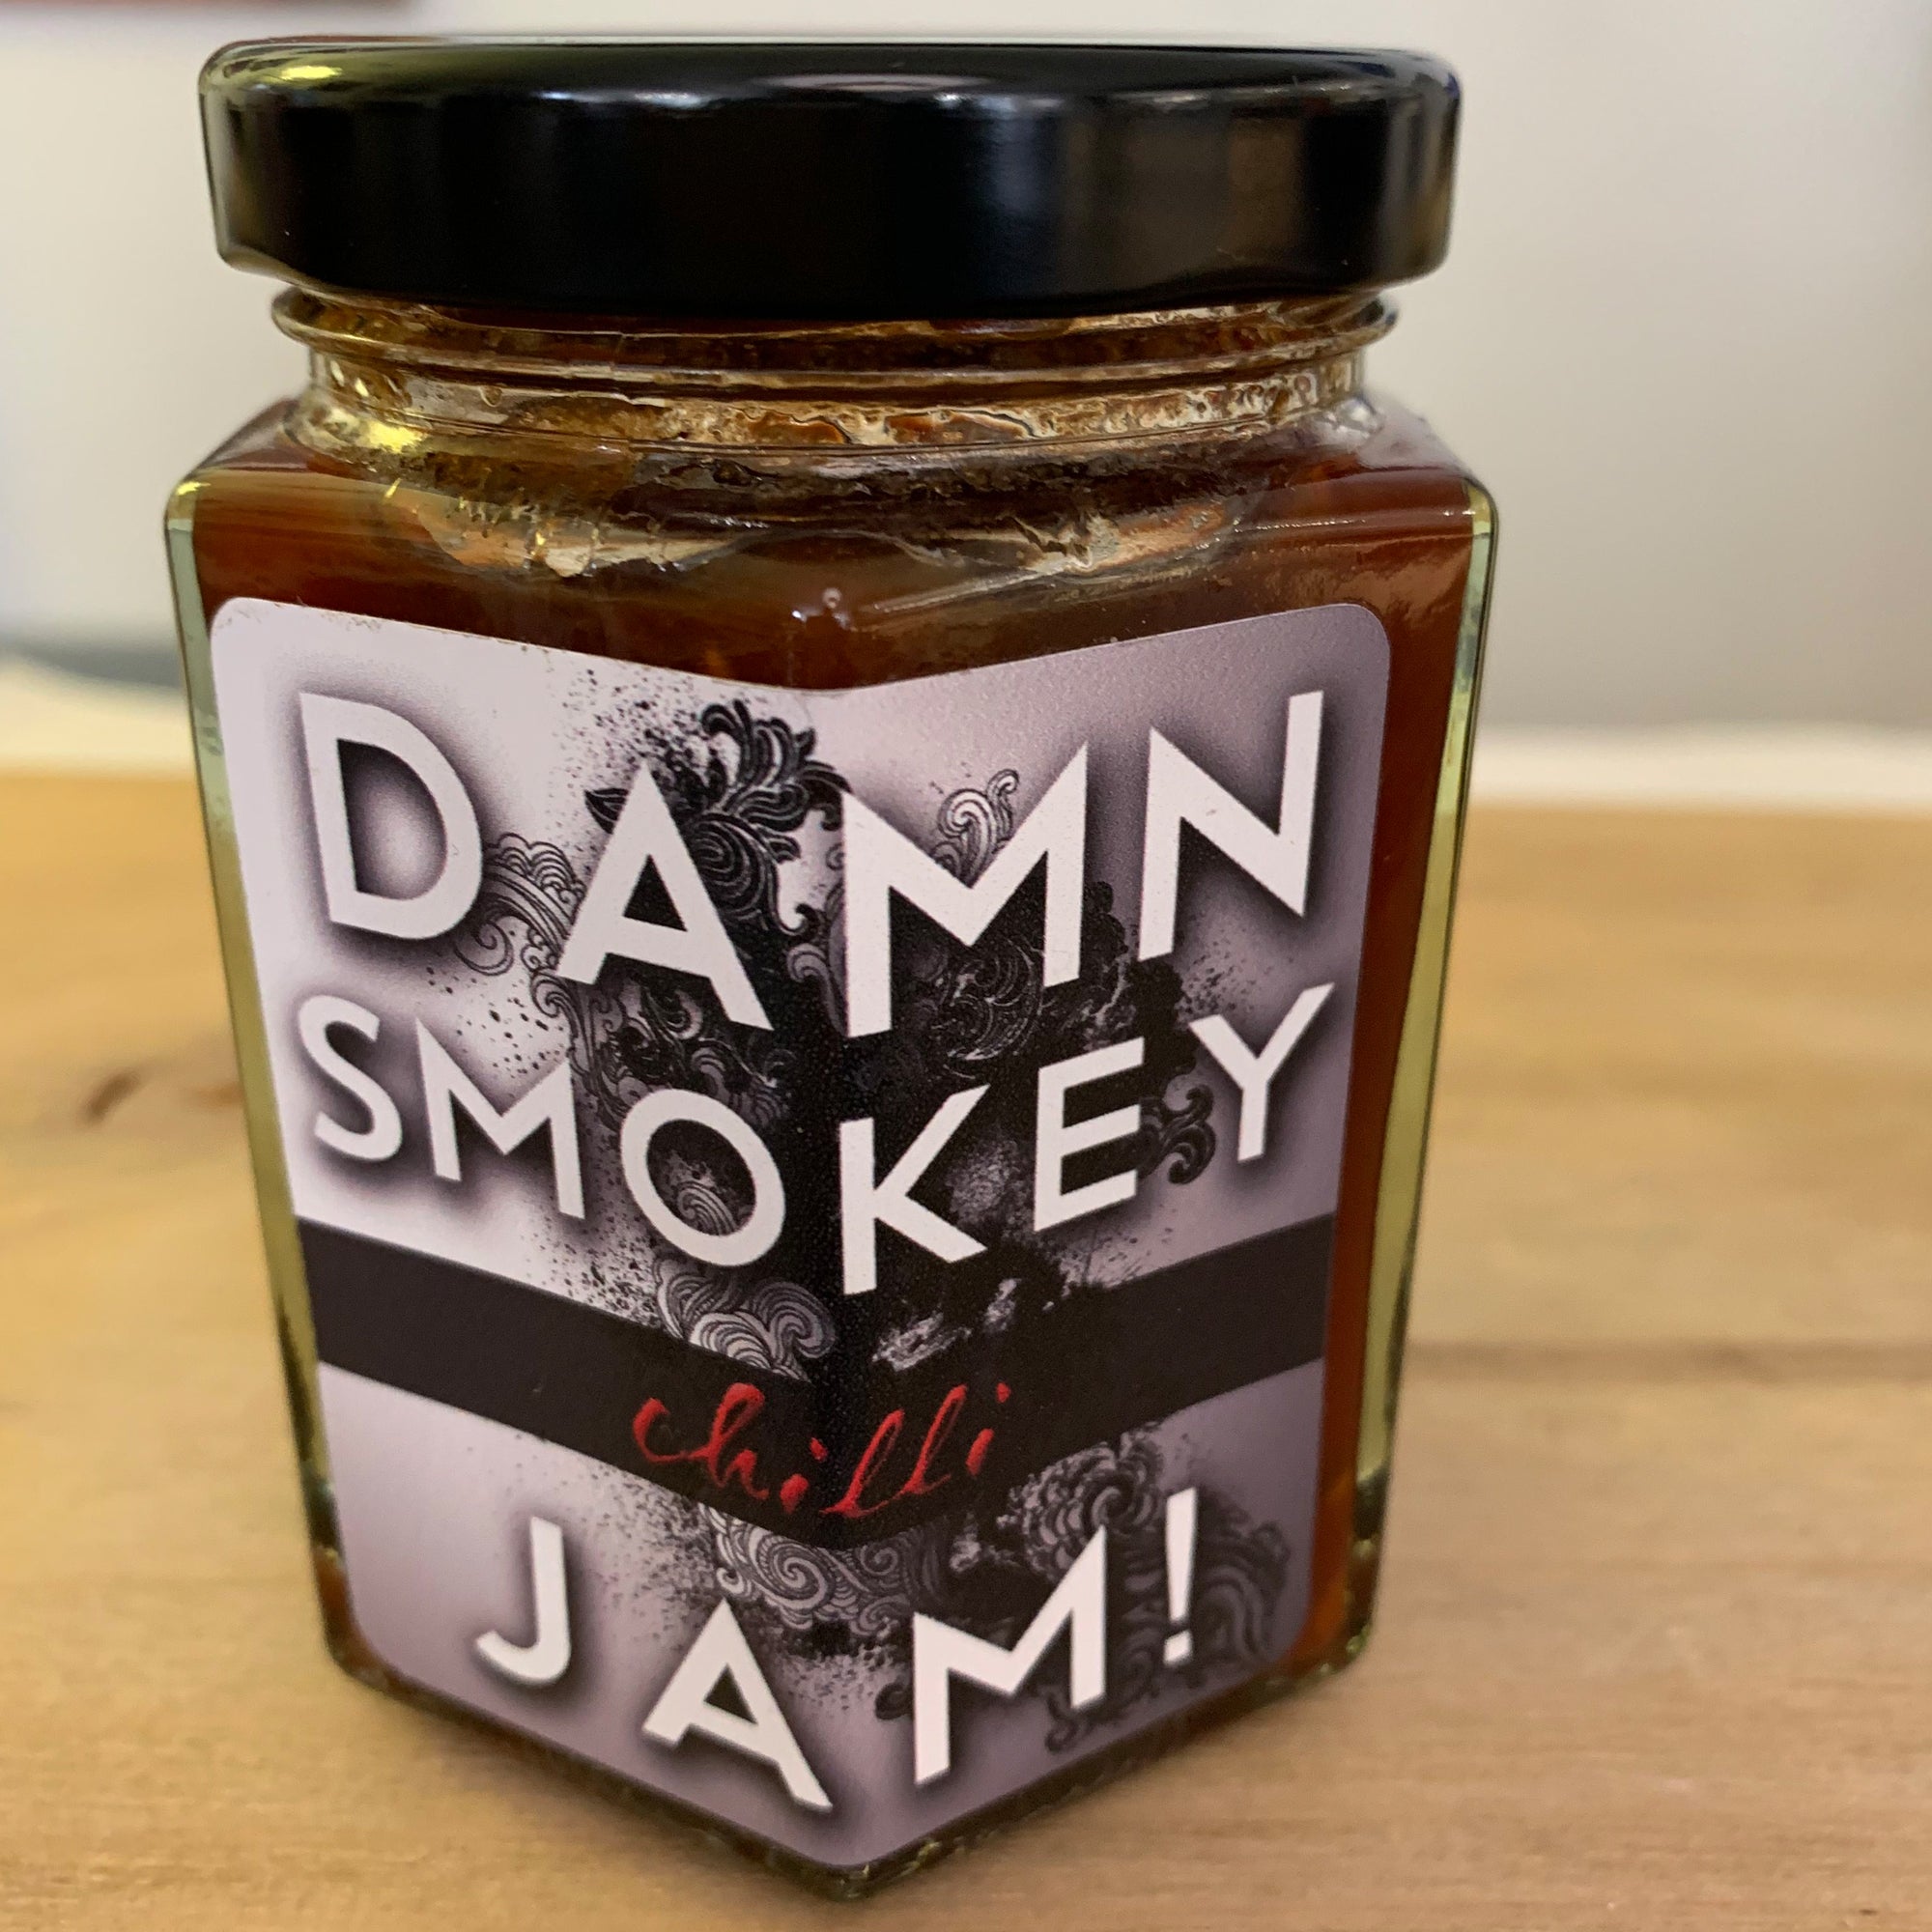 Dam Smokey Chilli Jam By Damn Good Jam